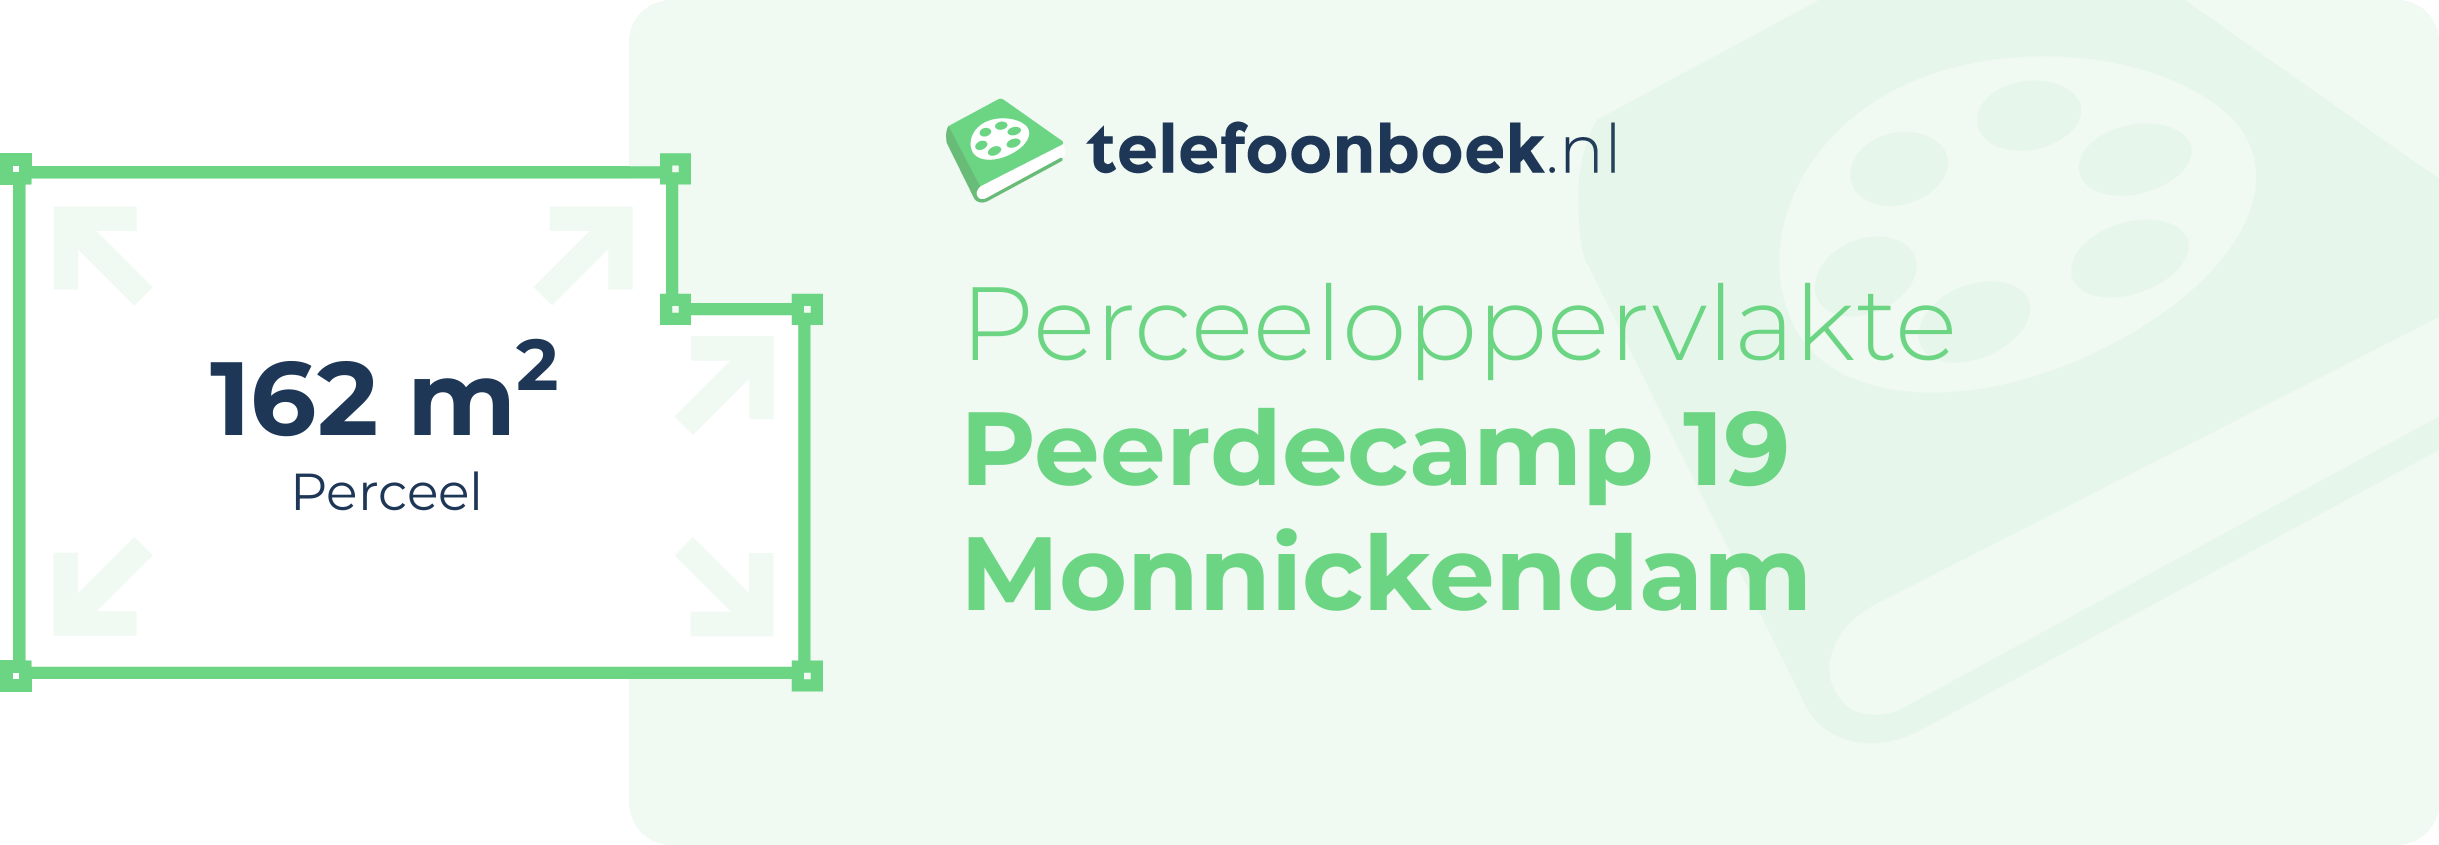 Perceeloppervlakte Peerdecamp 19 Monnickendam